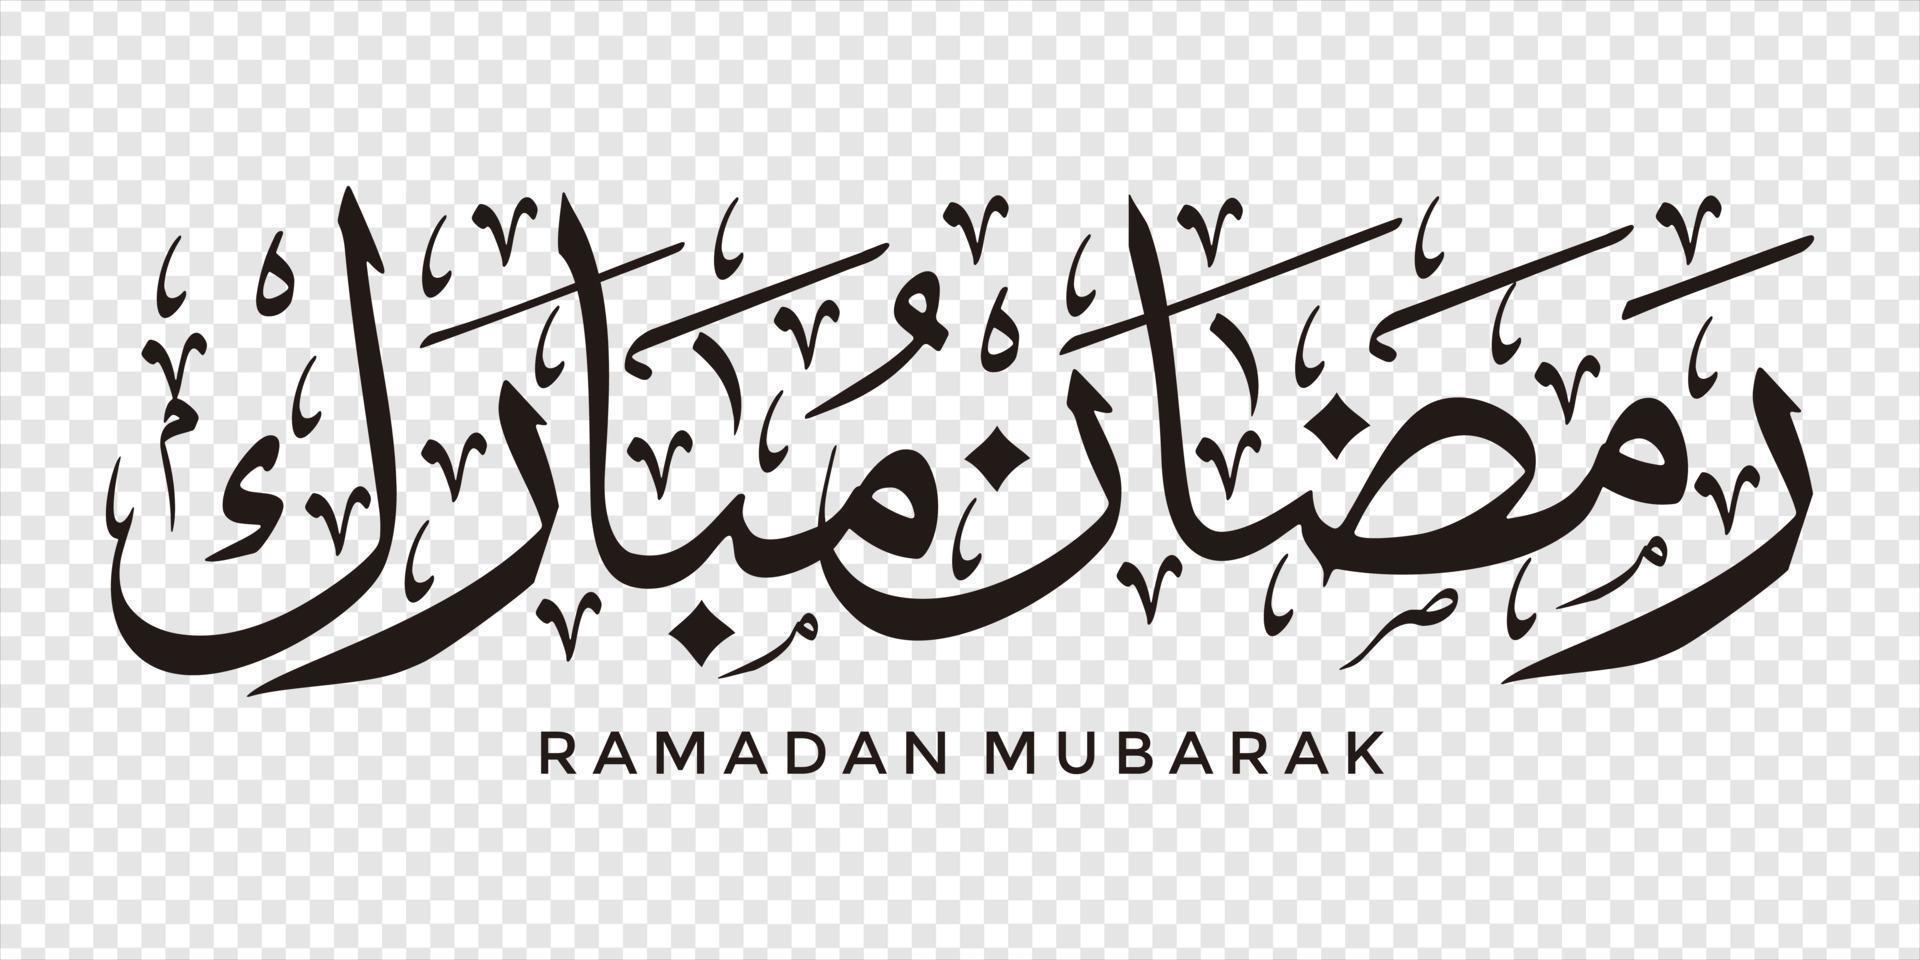 ramadan mubarak i arabisk kalligrafi, designelement på en transparent bakgrund. vektor illustration